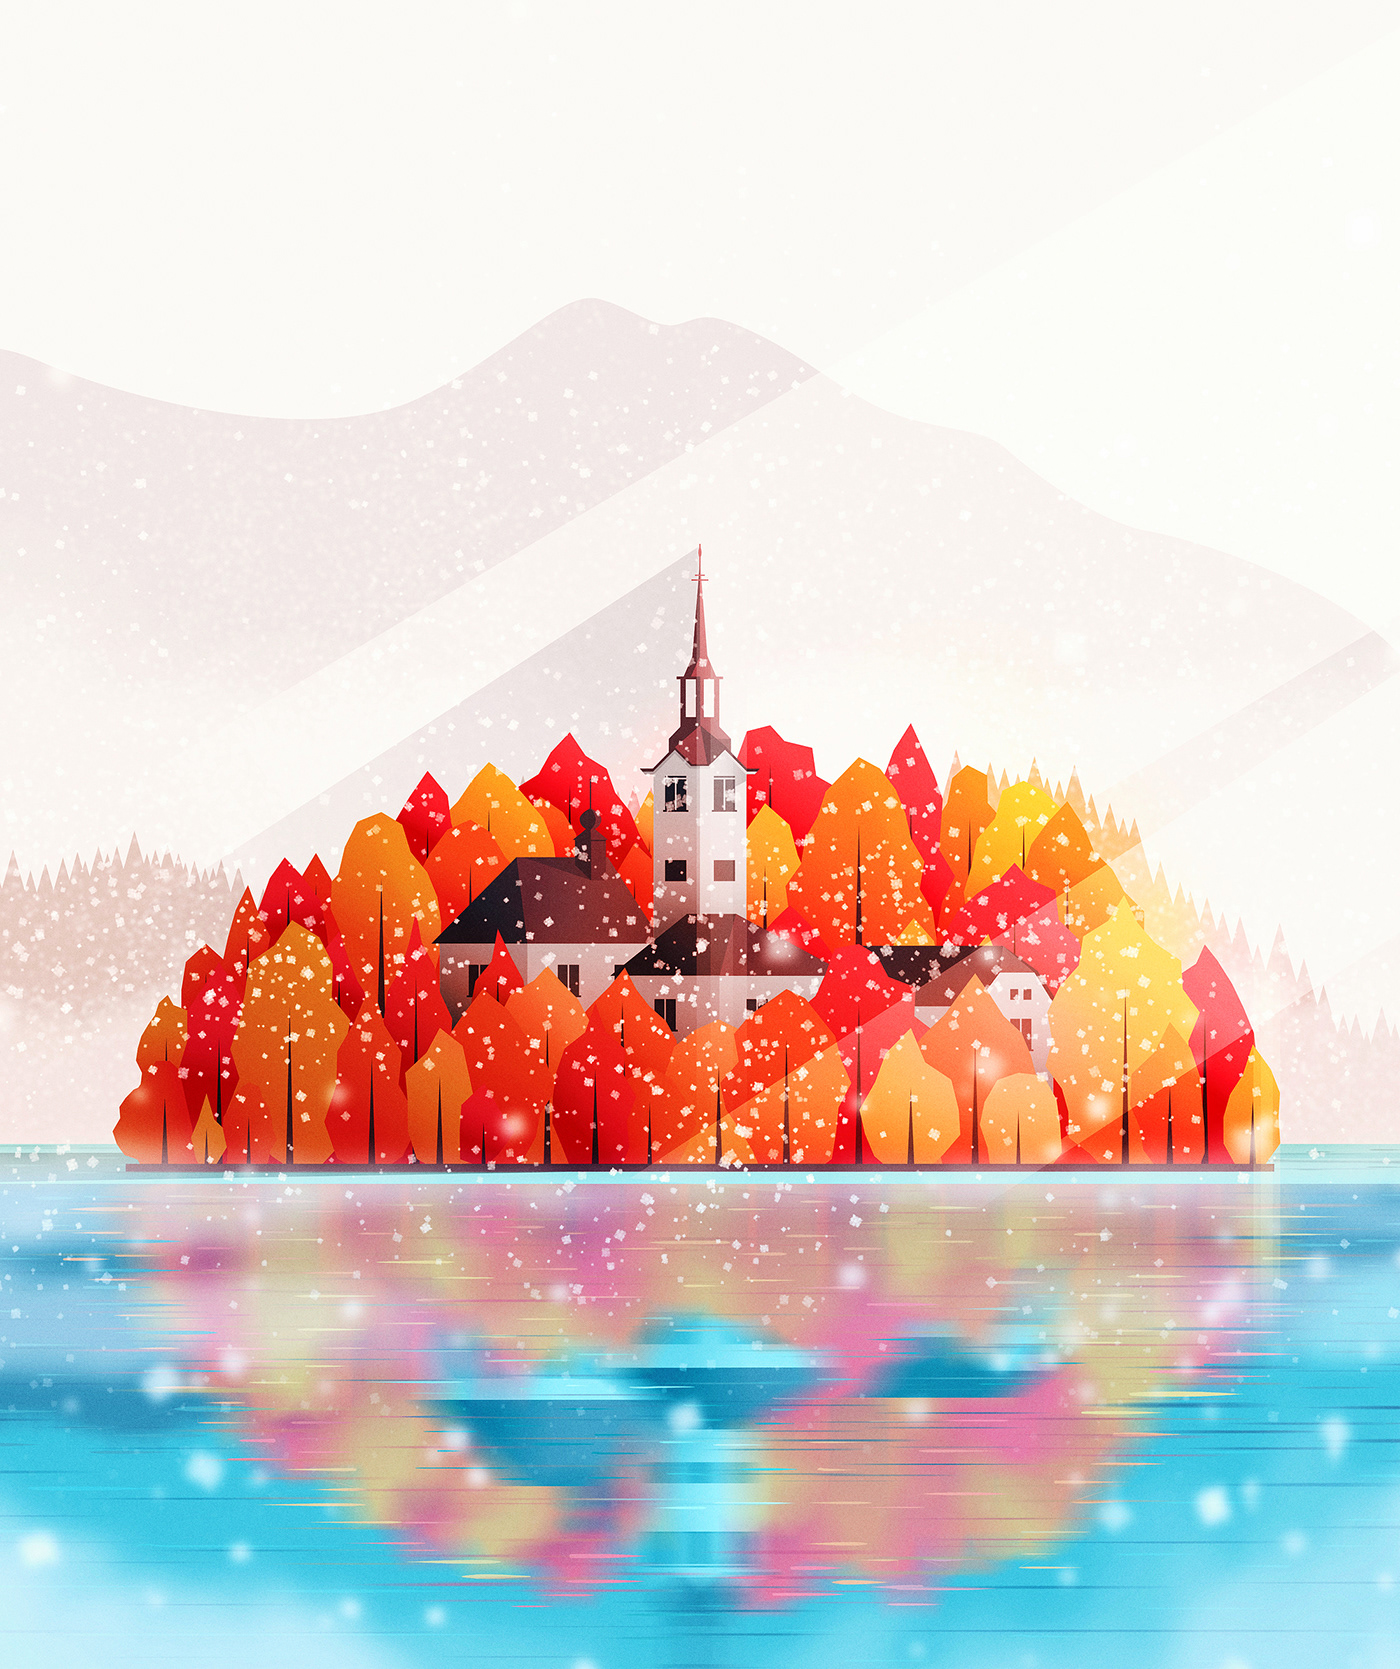 art digitalart Minimalism autumn winter snow forest lake village Nature